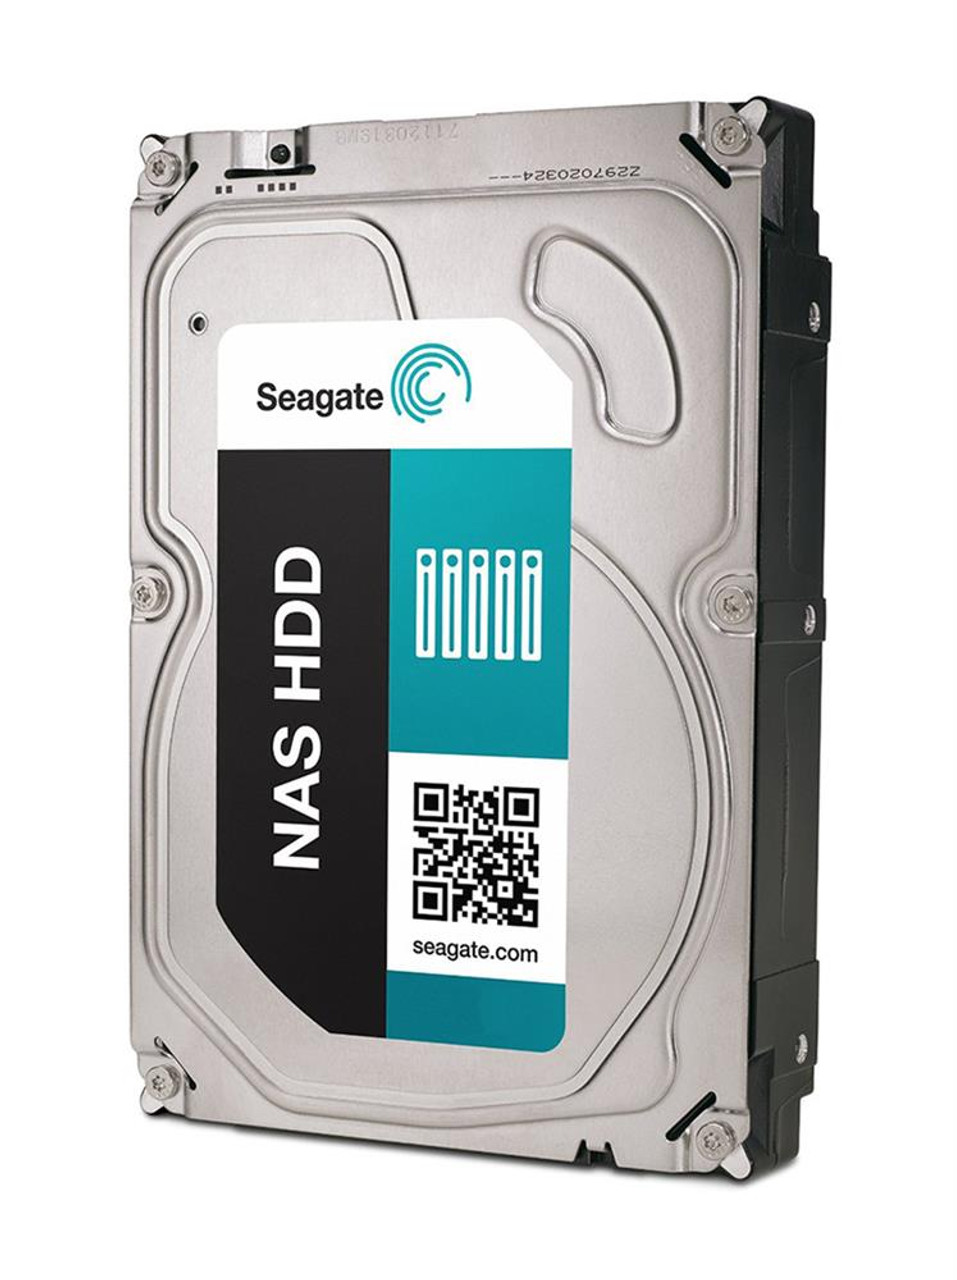 STBD4000100 Seagate NAS HDD 4TB SATA 6Gbps 64MB Cache 3.5-inch Internal Drive (Retail